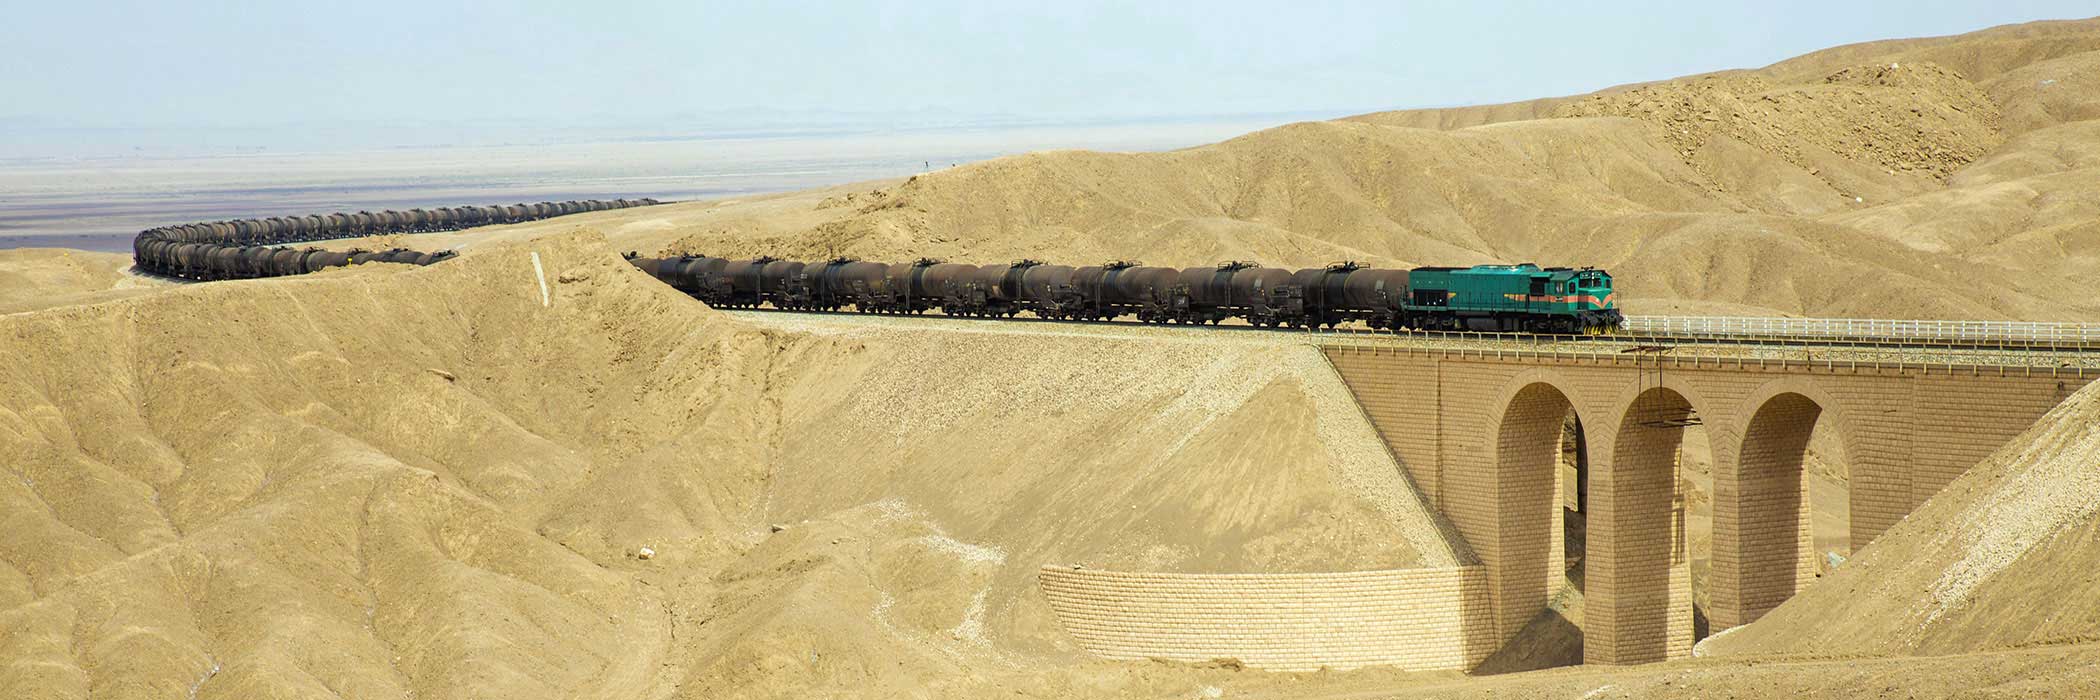 Freight train hauling tank wagons, Iran